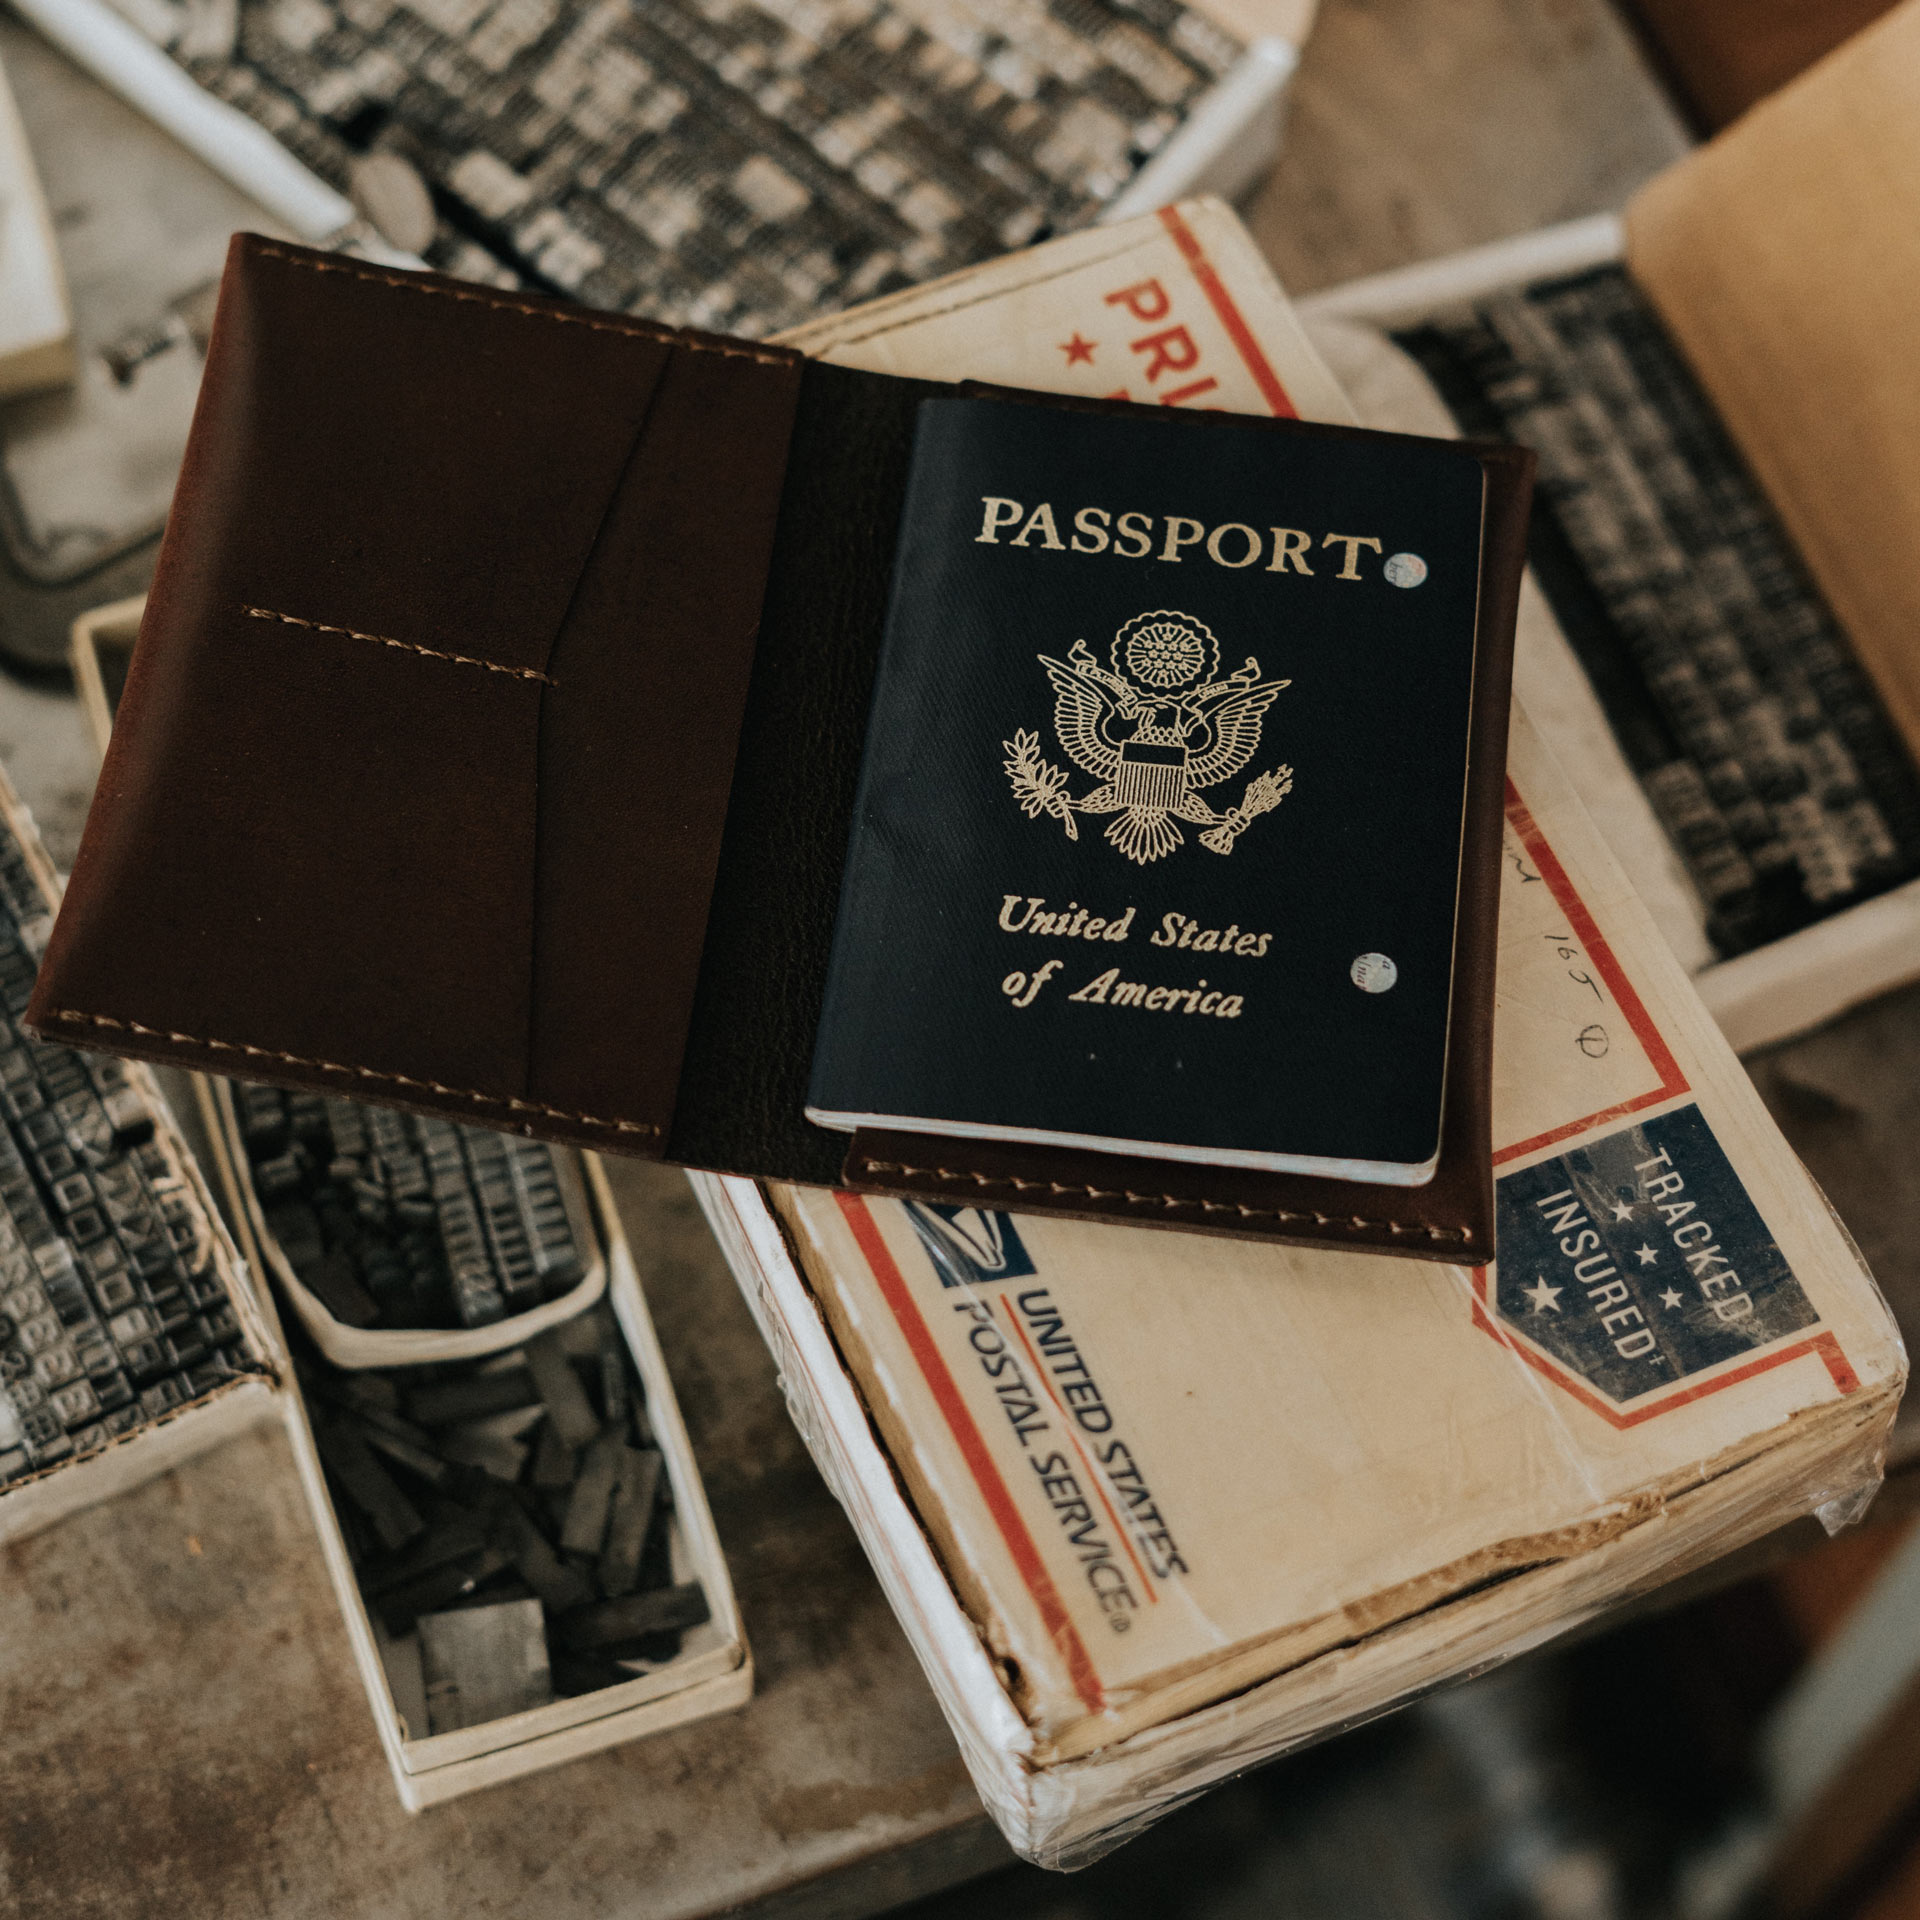 Passport and postage